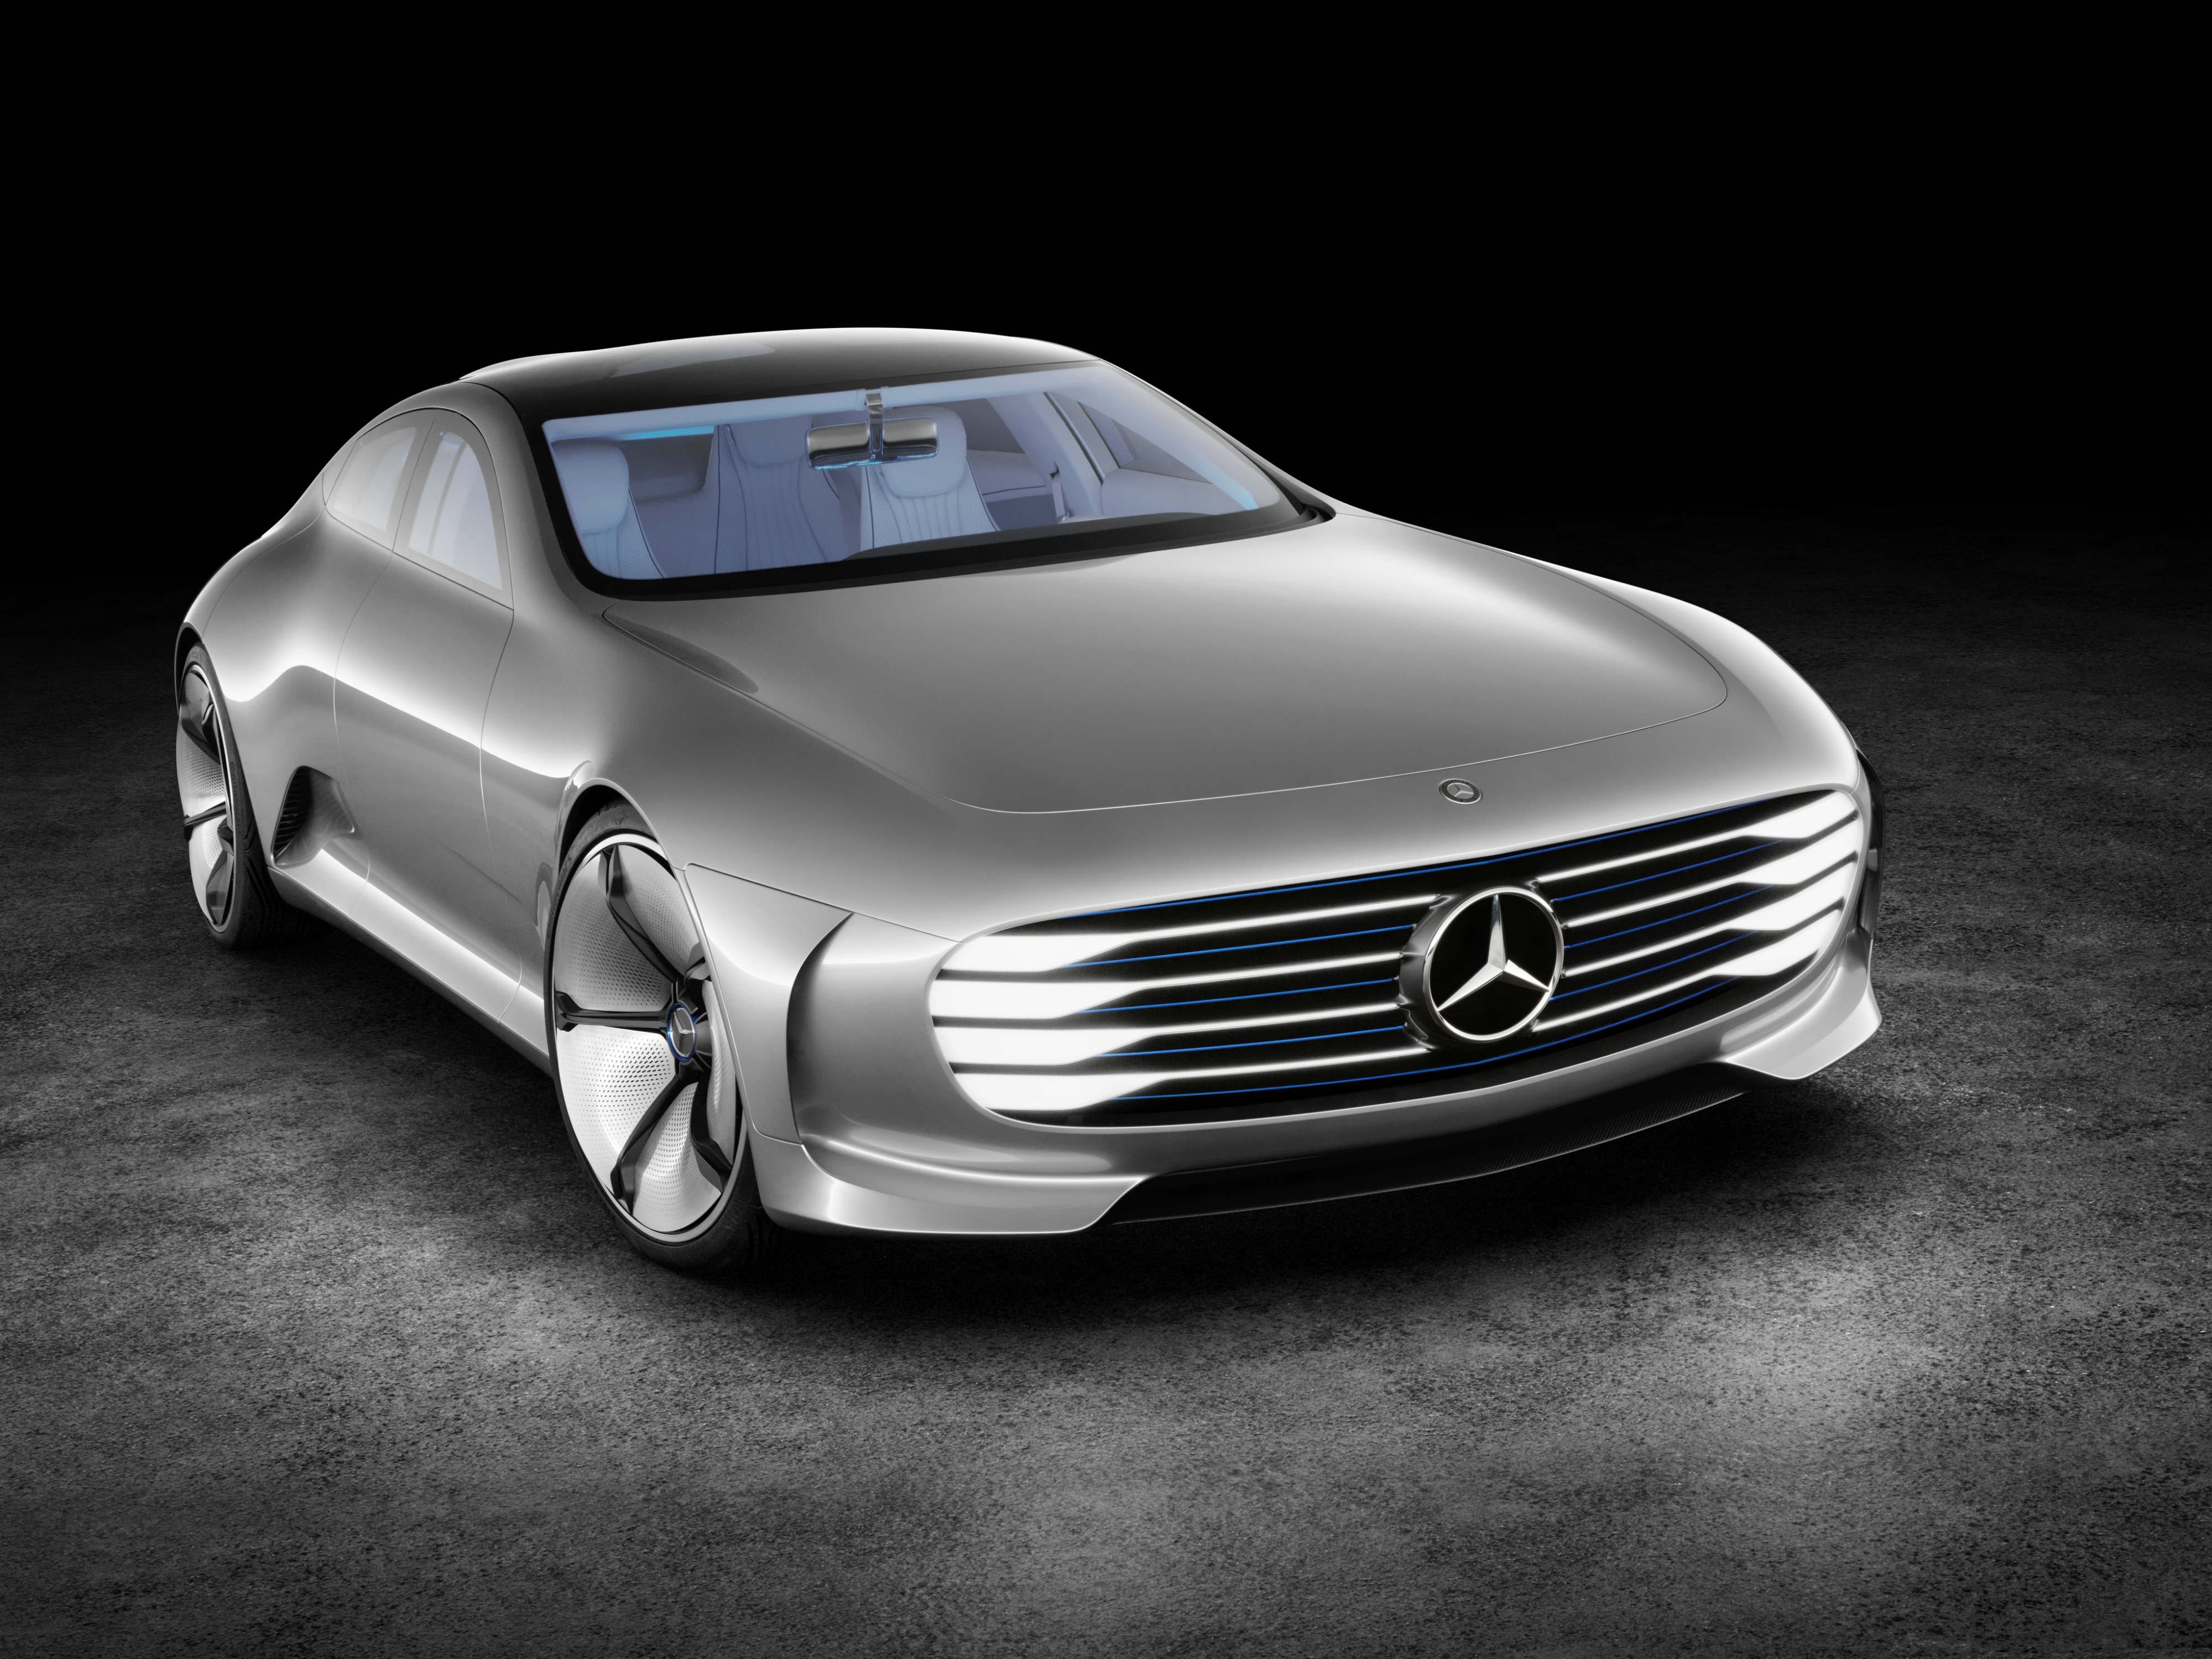 Mercedes Concept IAA has a plug-in hybrid drivetrain